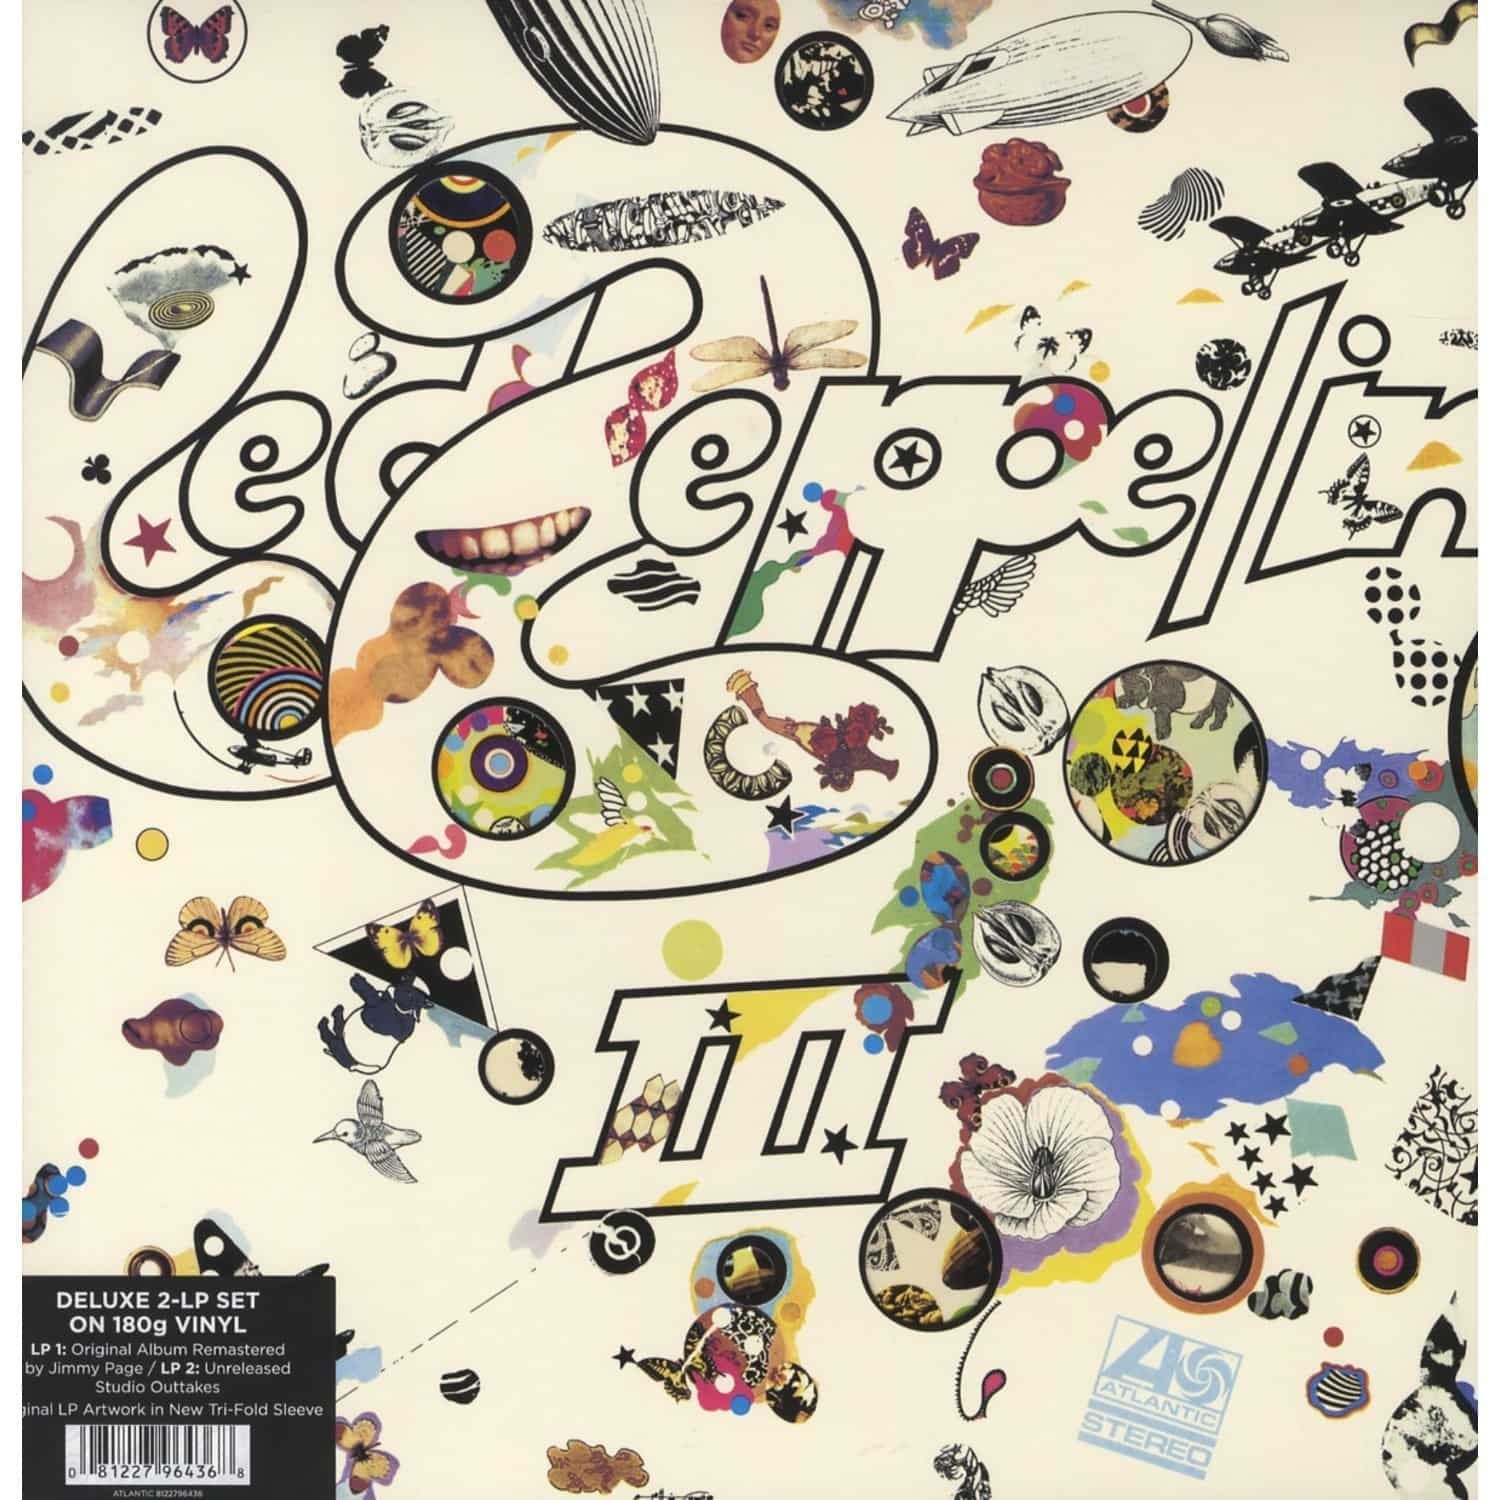 Led zeppelin iii led zeppelin. Led Zeppelin 3. Виниловая пластинка led Zeppelin. Led Zeppelin - led Zeppelin III (1970, LP), 2014 reissue. Led Zeppelin III обложка.